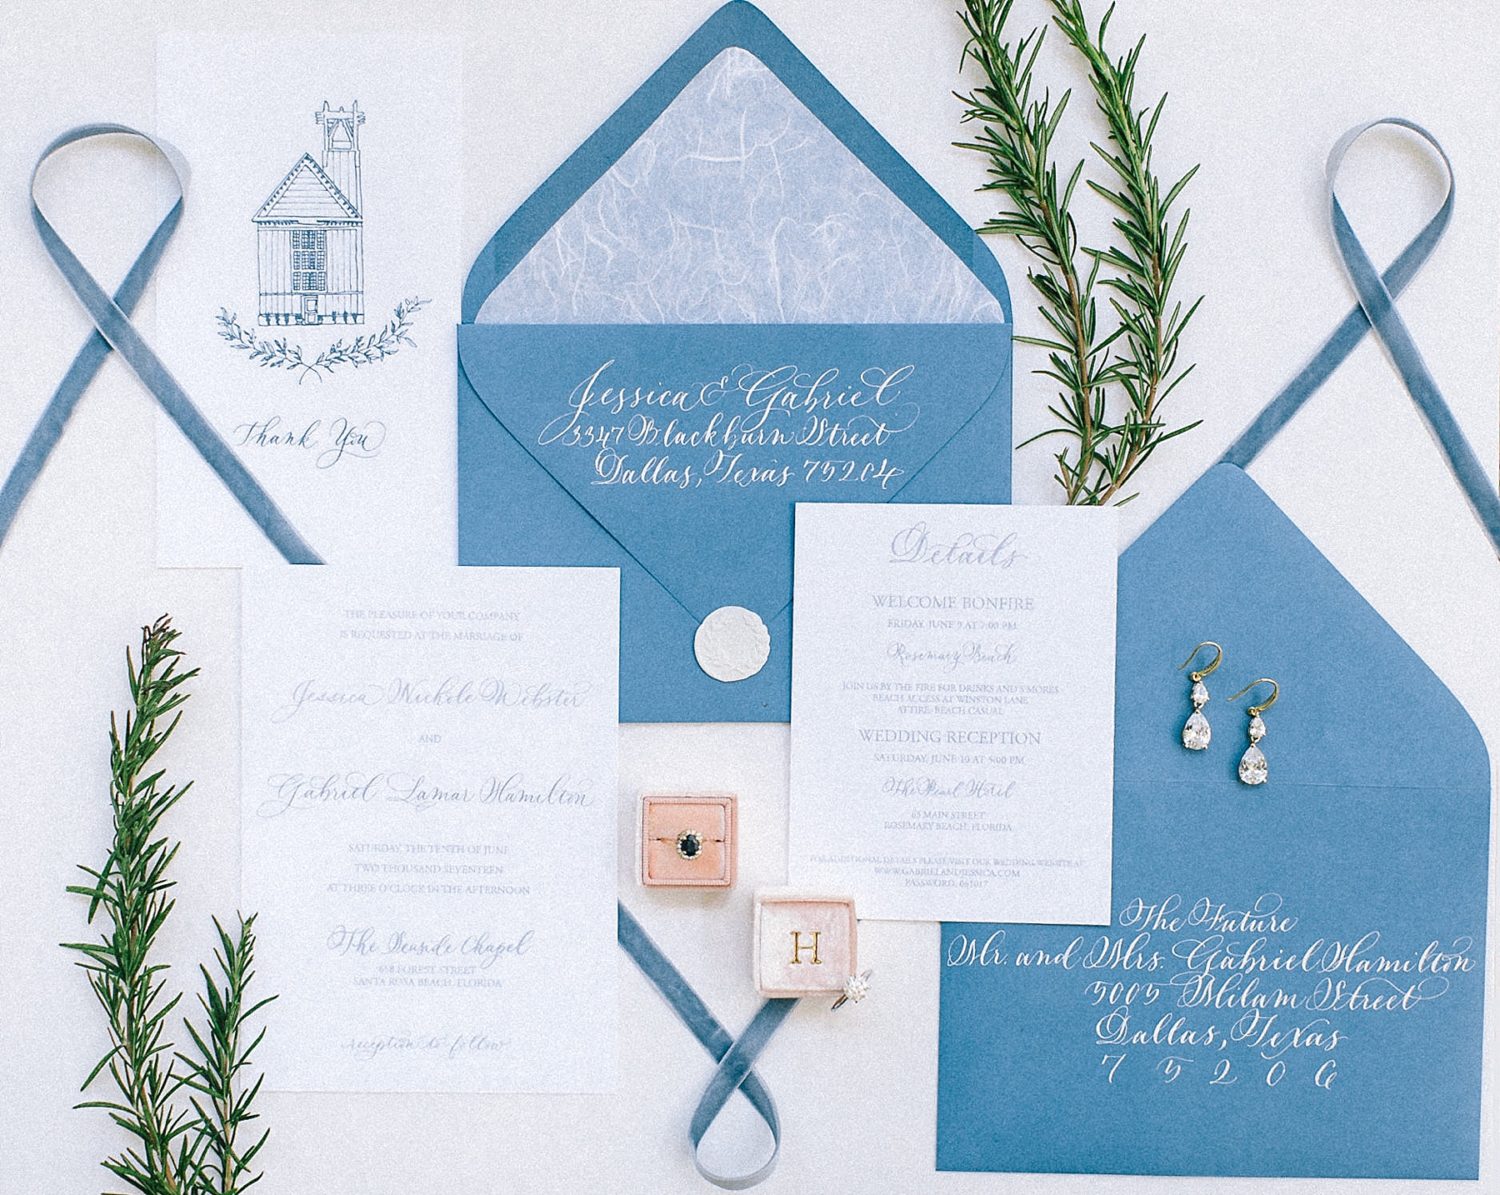 Blue wedding invitation suite details for seaside chapel wedding